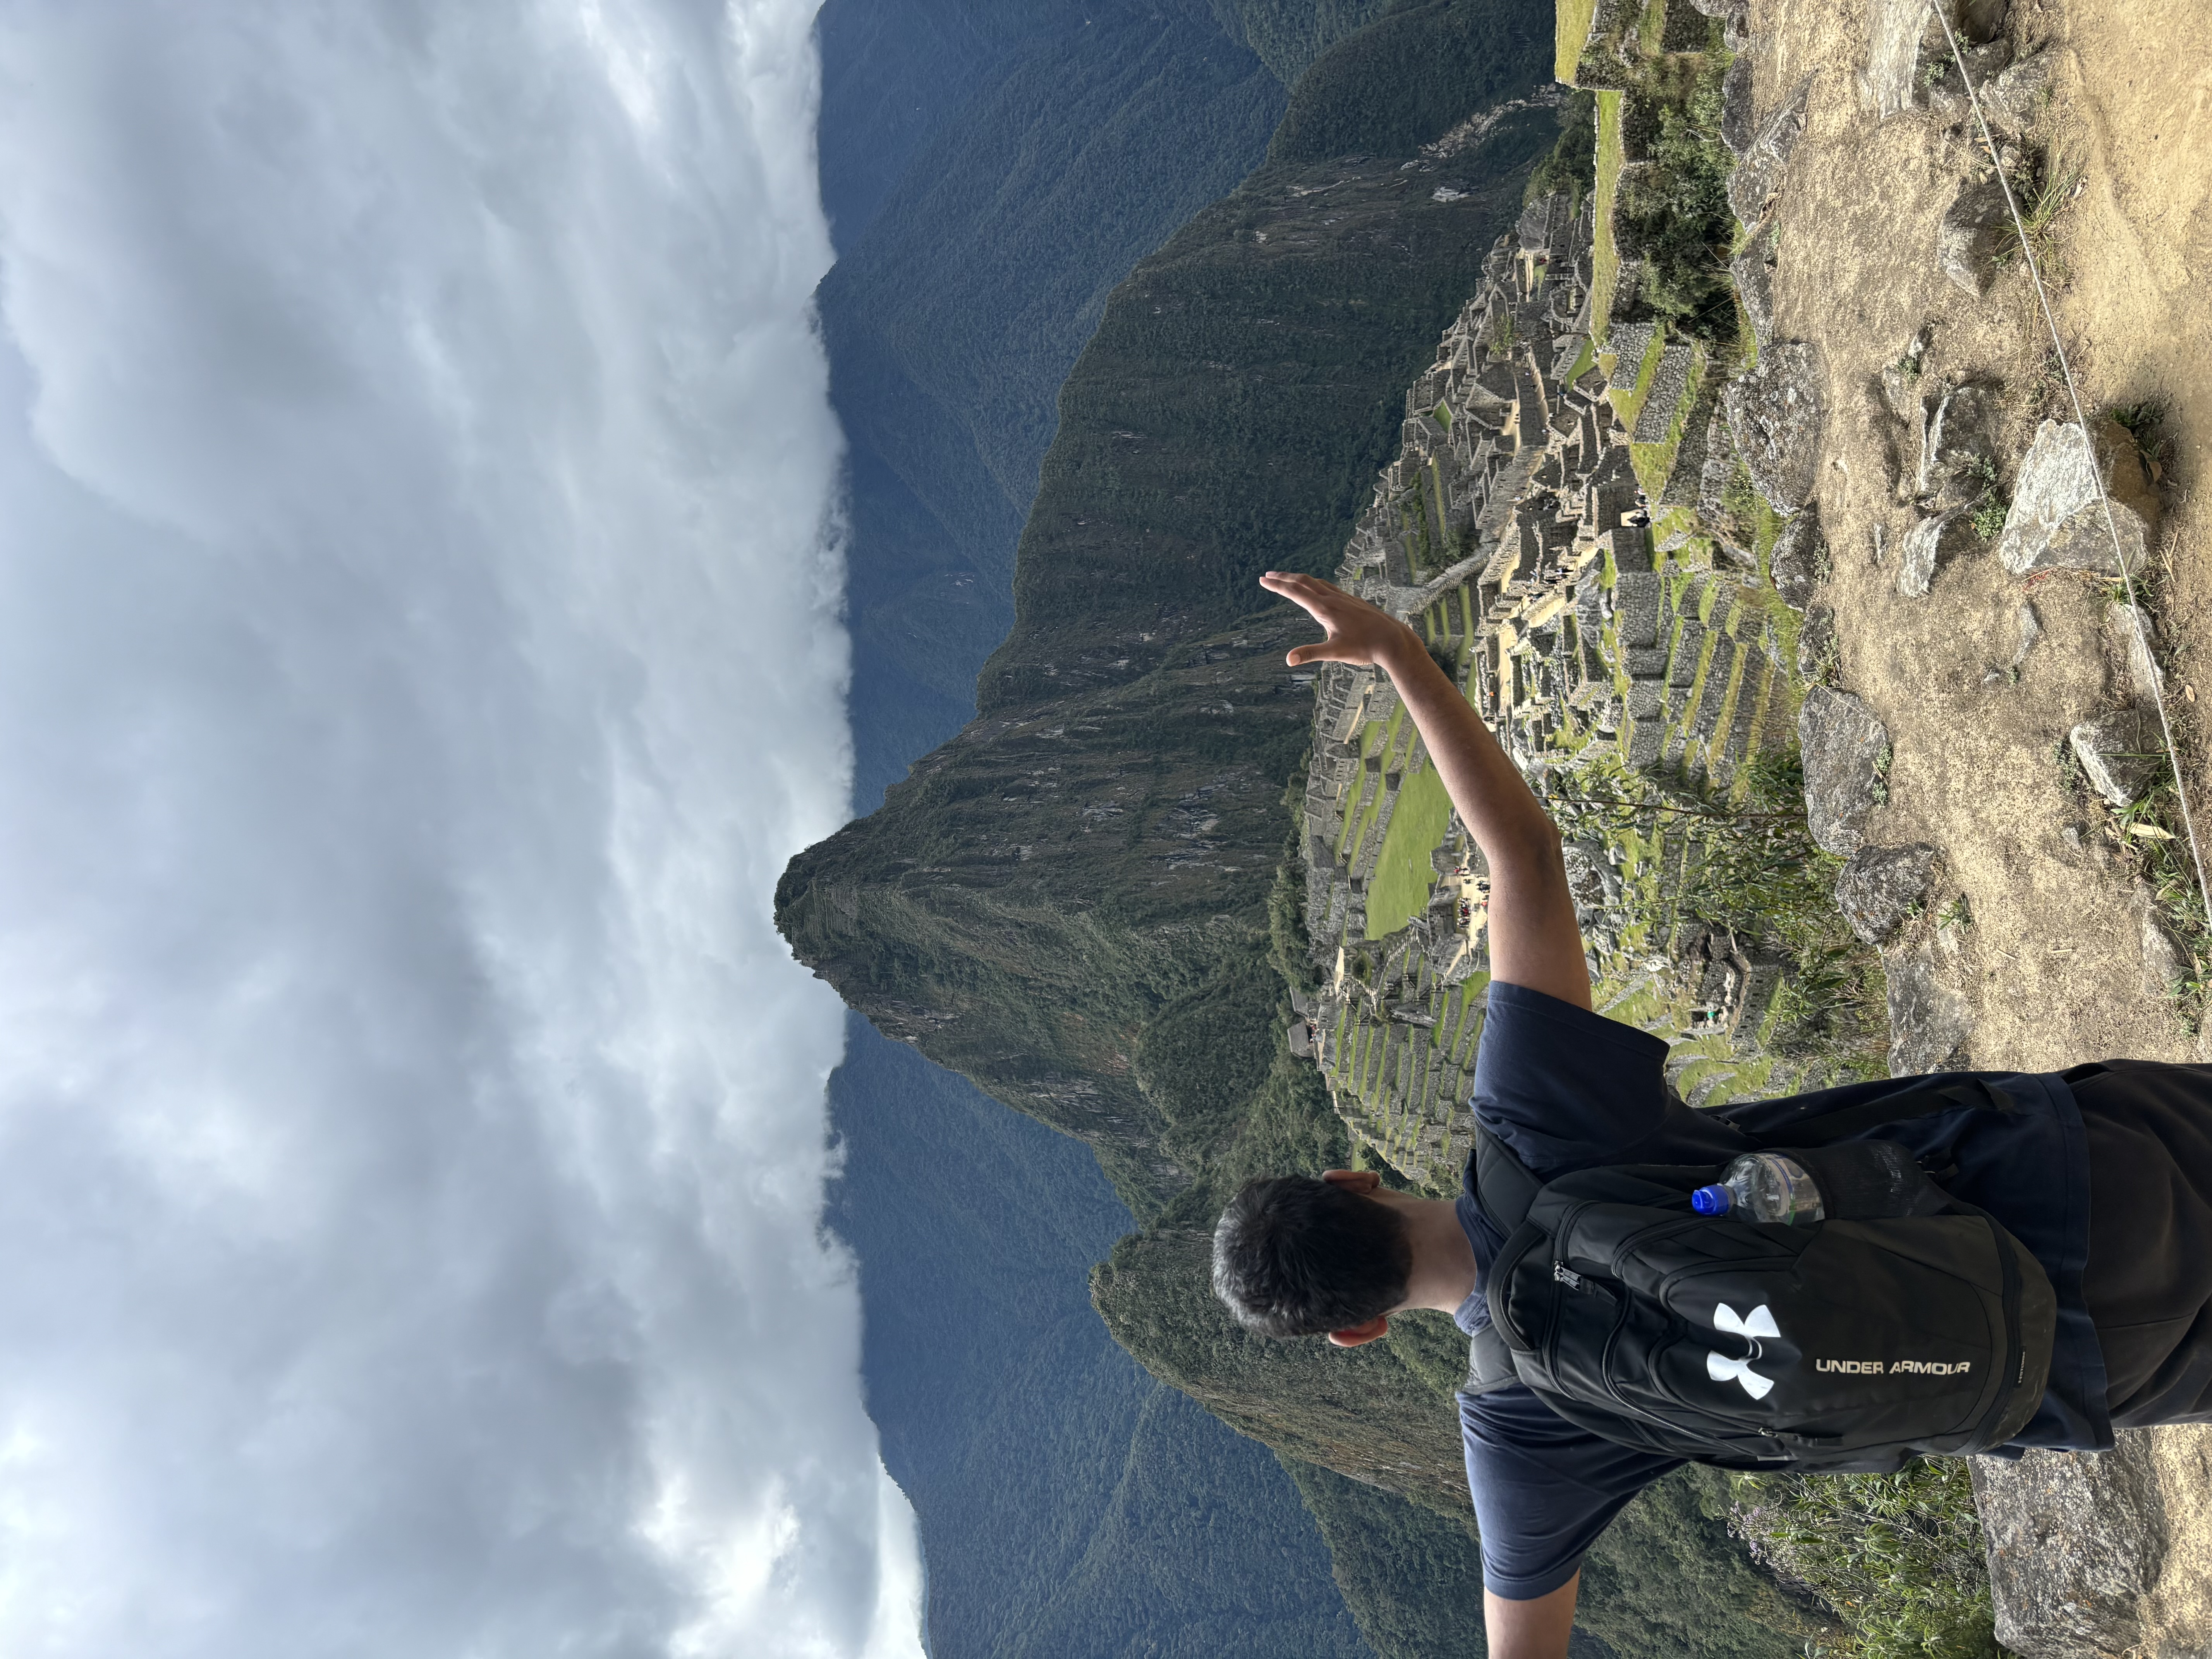  Bilhan Chagari hiked Machu Pichu. 